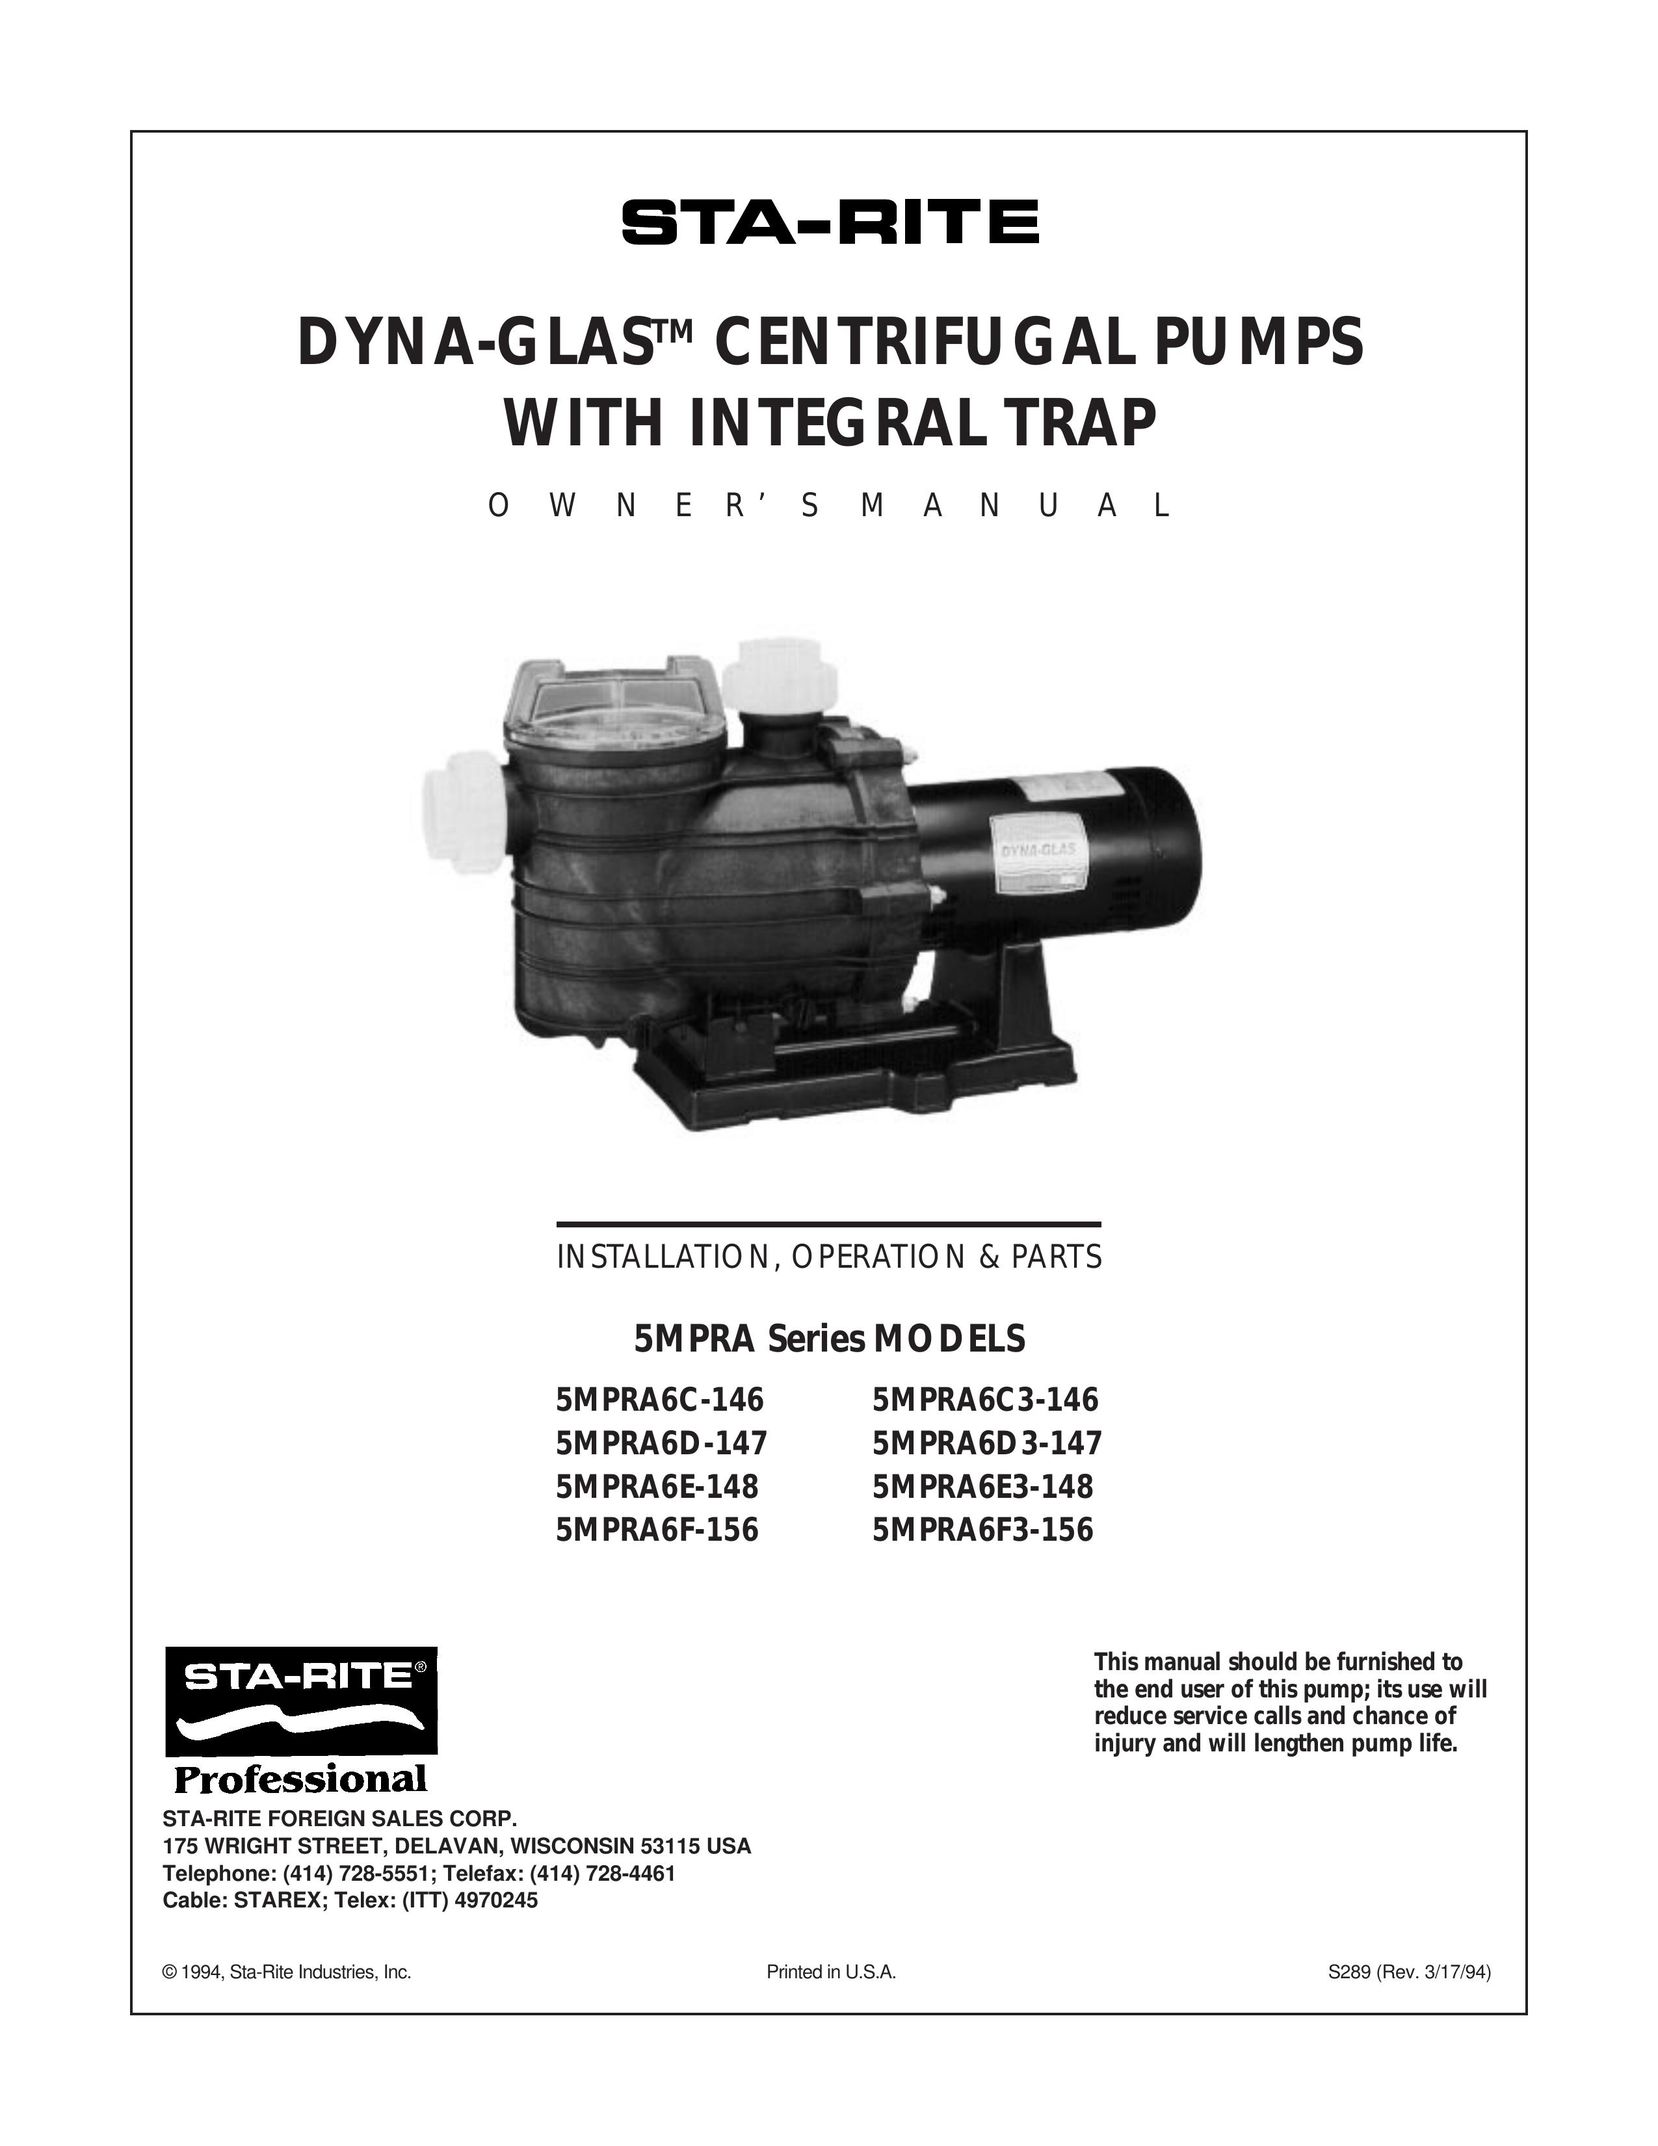 Mad Catz 5MPRA6D-147 Water Pump User Manual